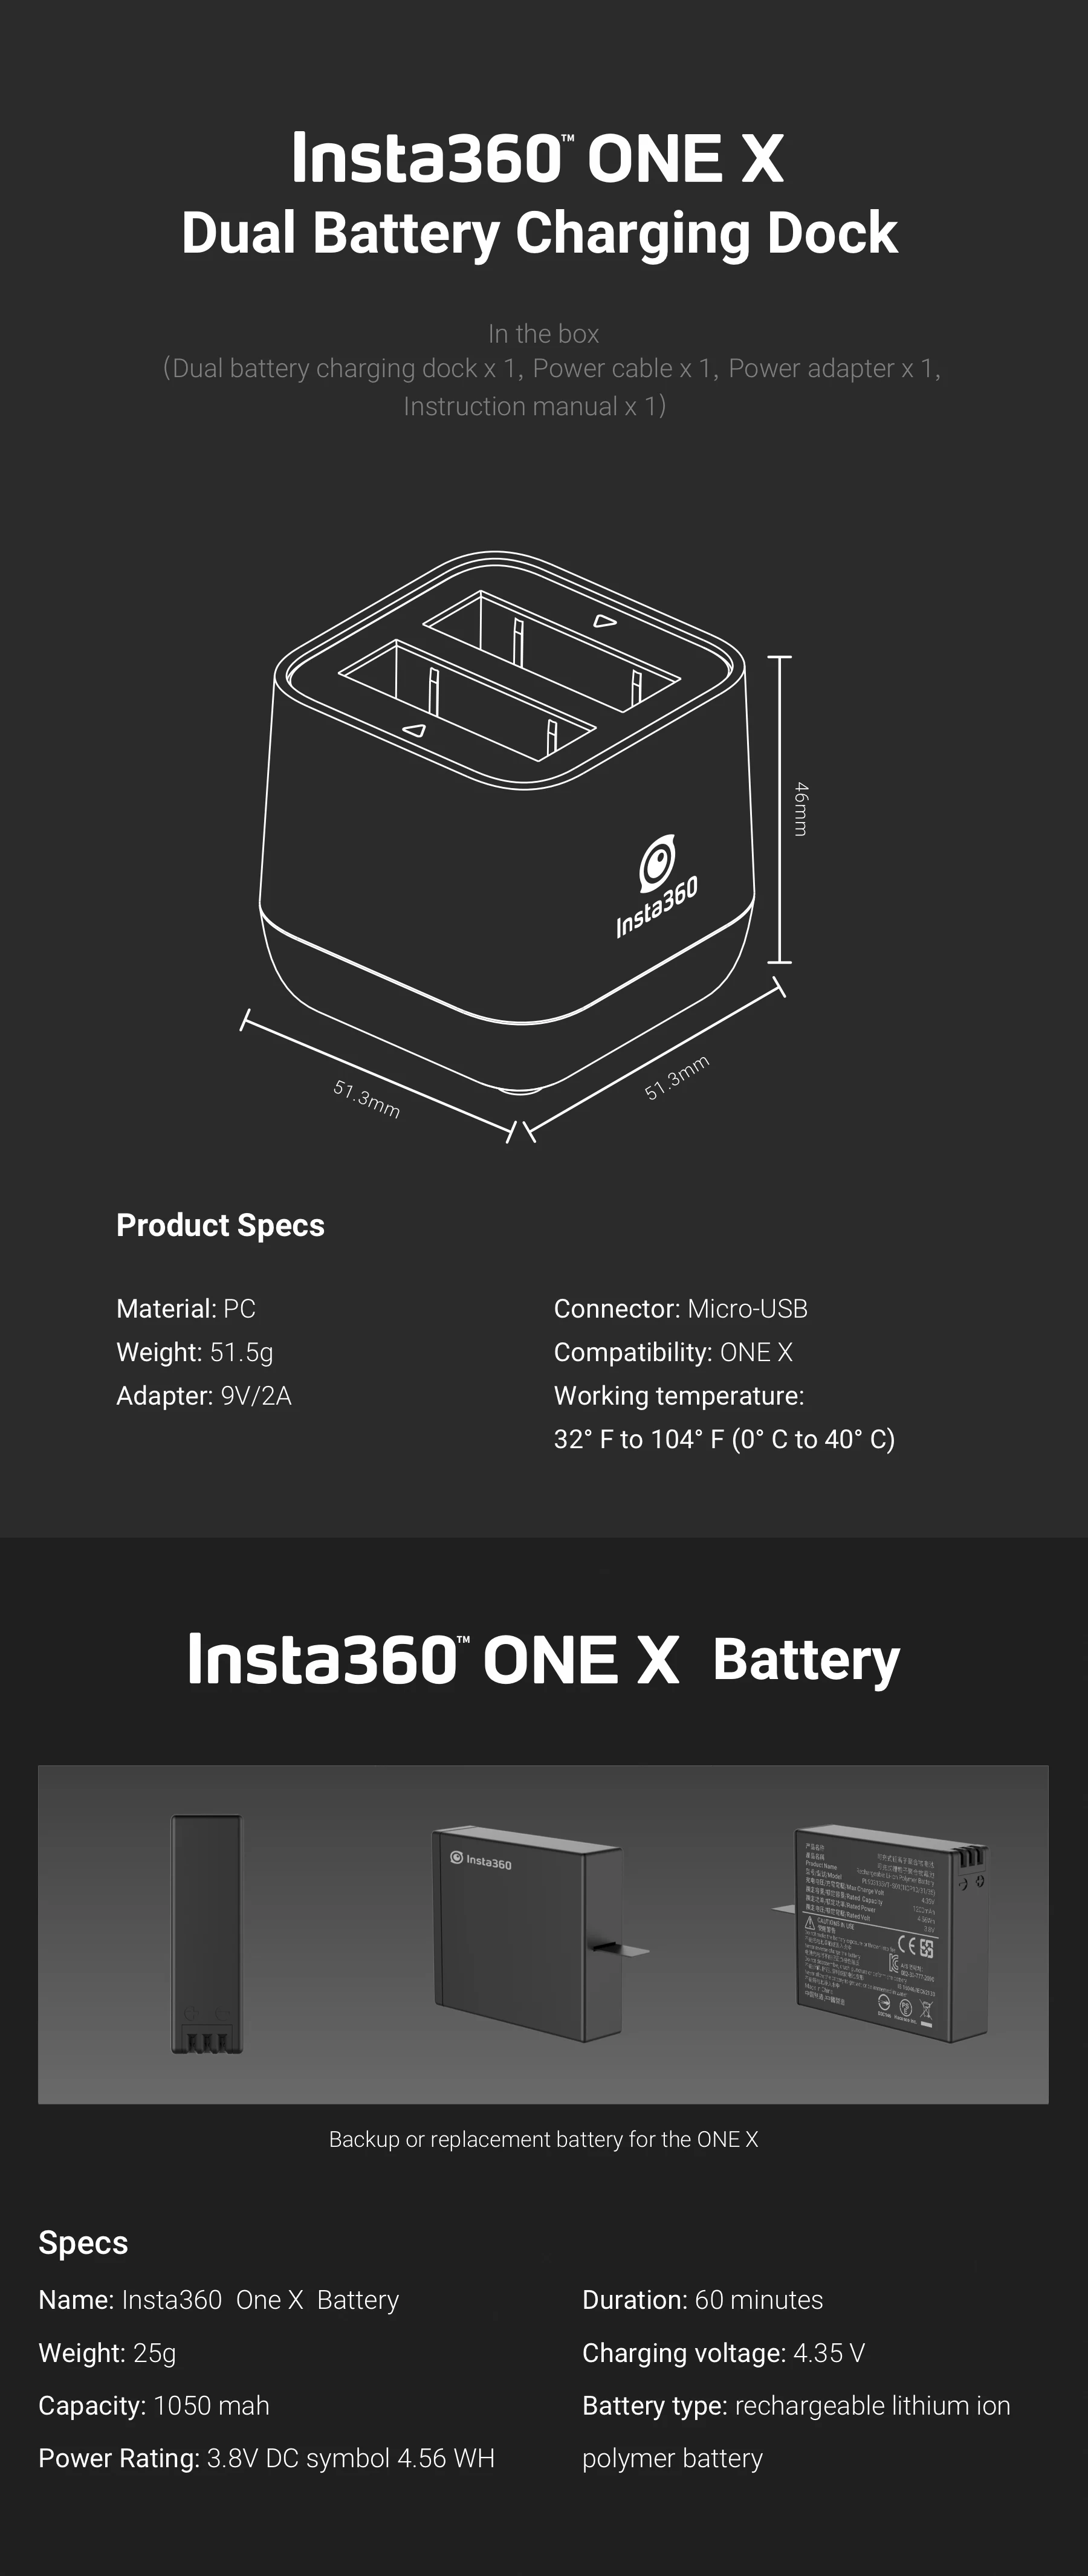 Аккумулятор для Insta360 ONE X 1050mAh LiPo аккумуляторы и зарядное устройство концентратор панорамная камера 9V 2A 60 минут Быстрая зарядка